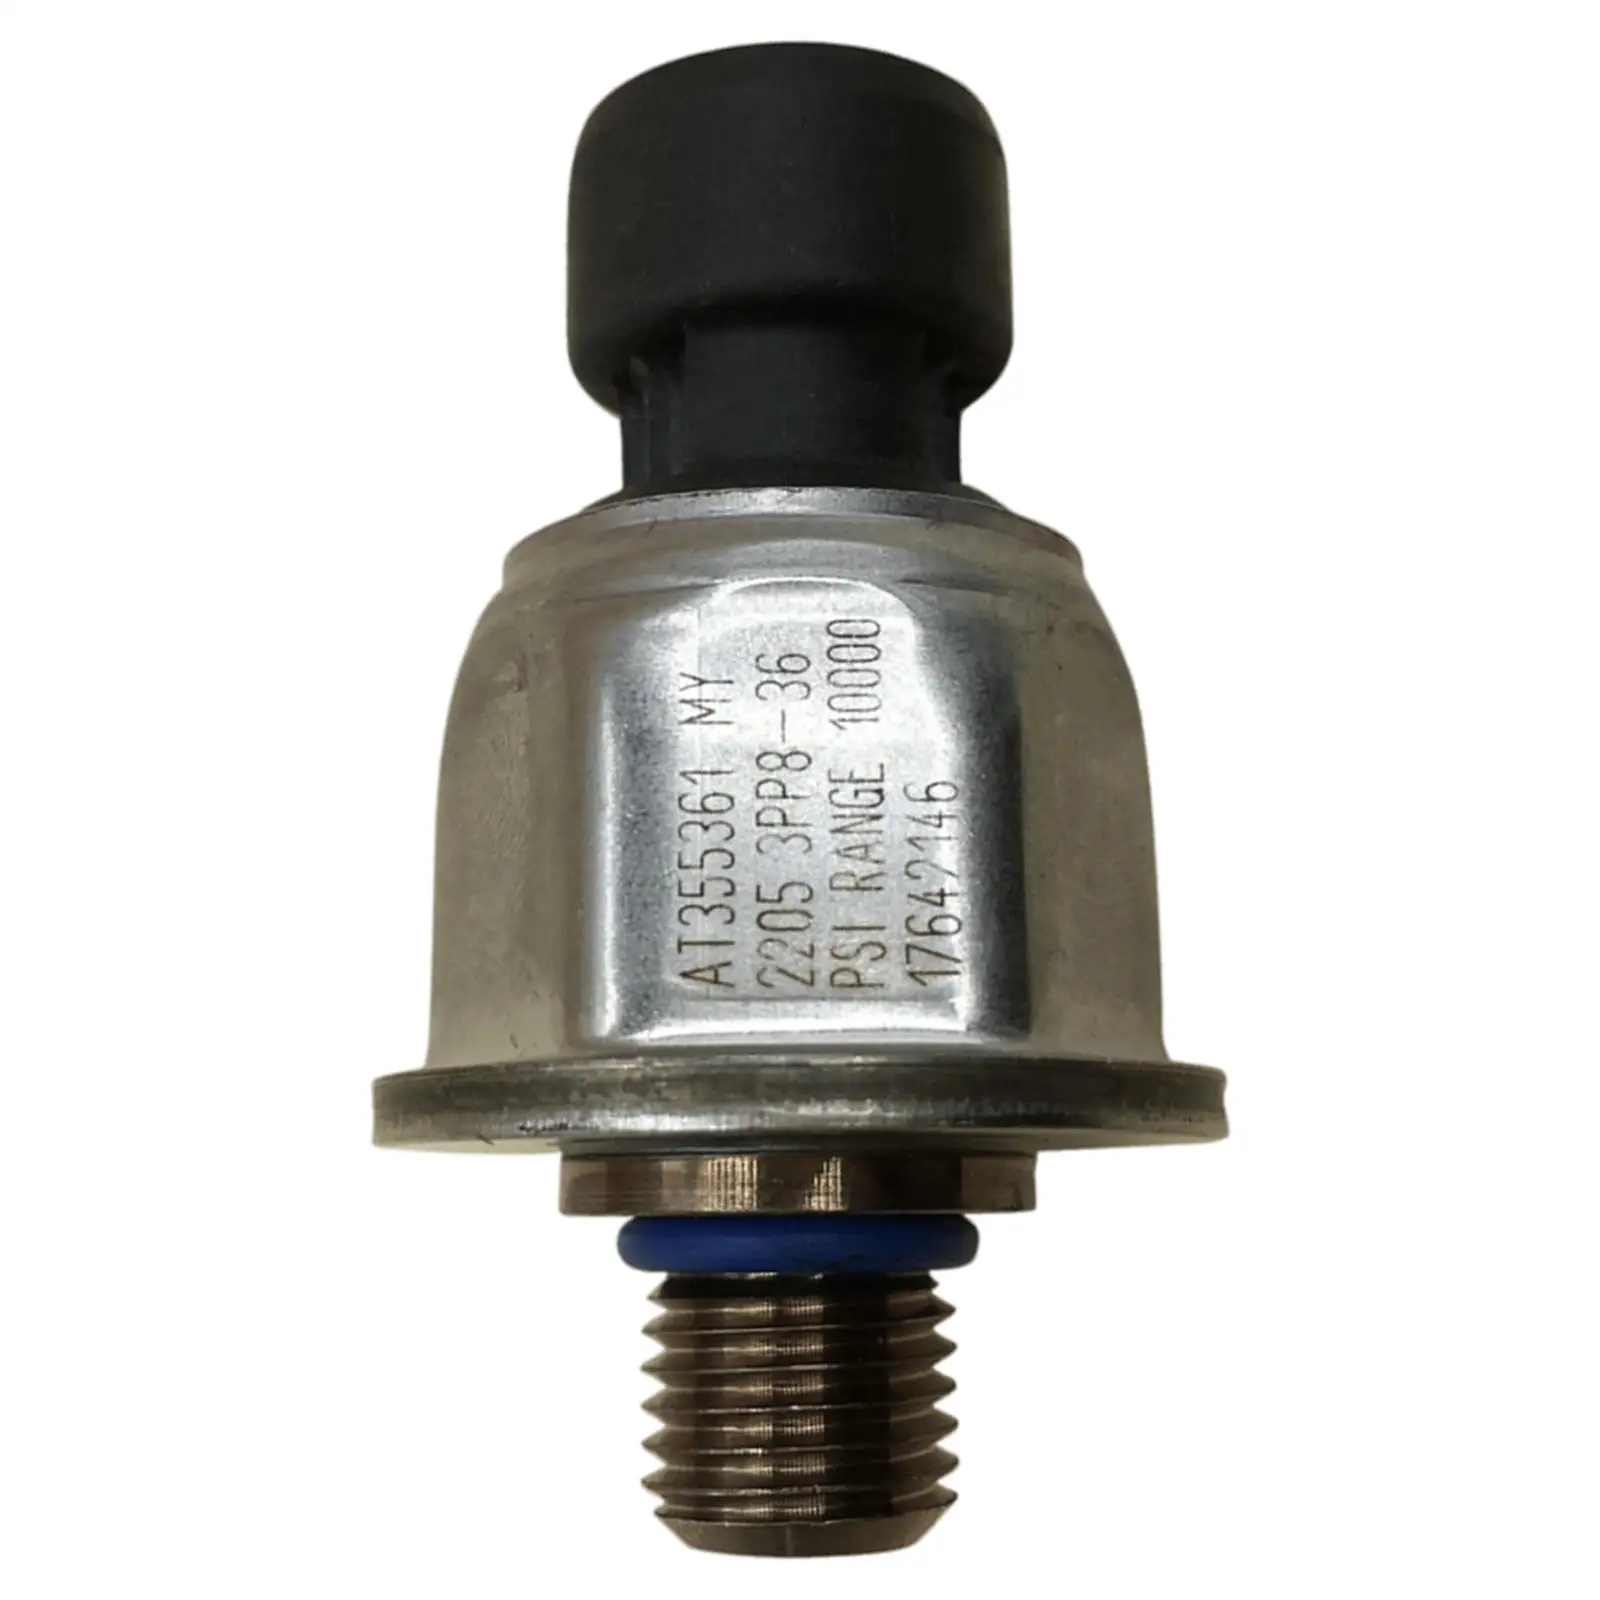 

Fuel Oil Pressure Sensor Pressure Sensor Valve for Sensata Accessories Replace Parts 3PP8-36